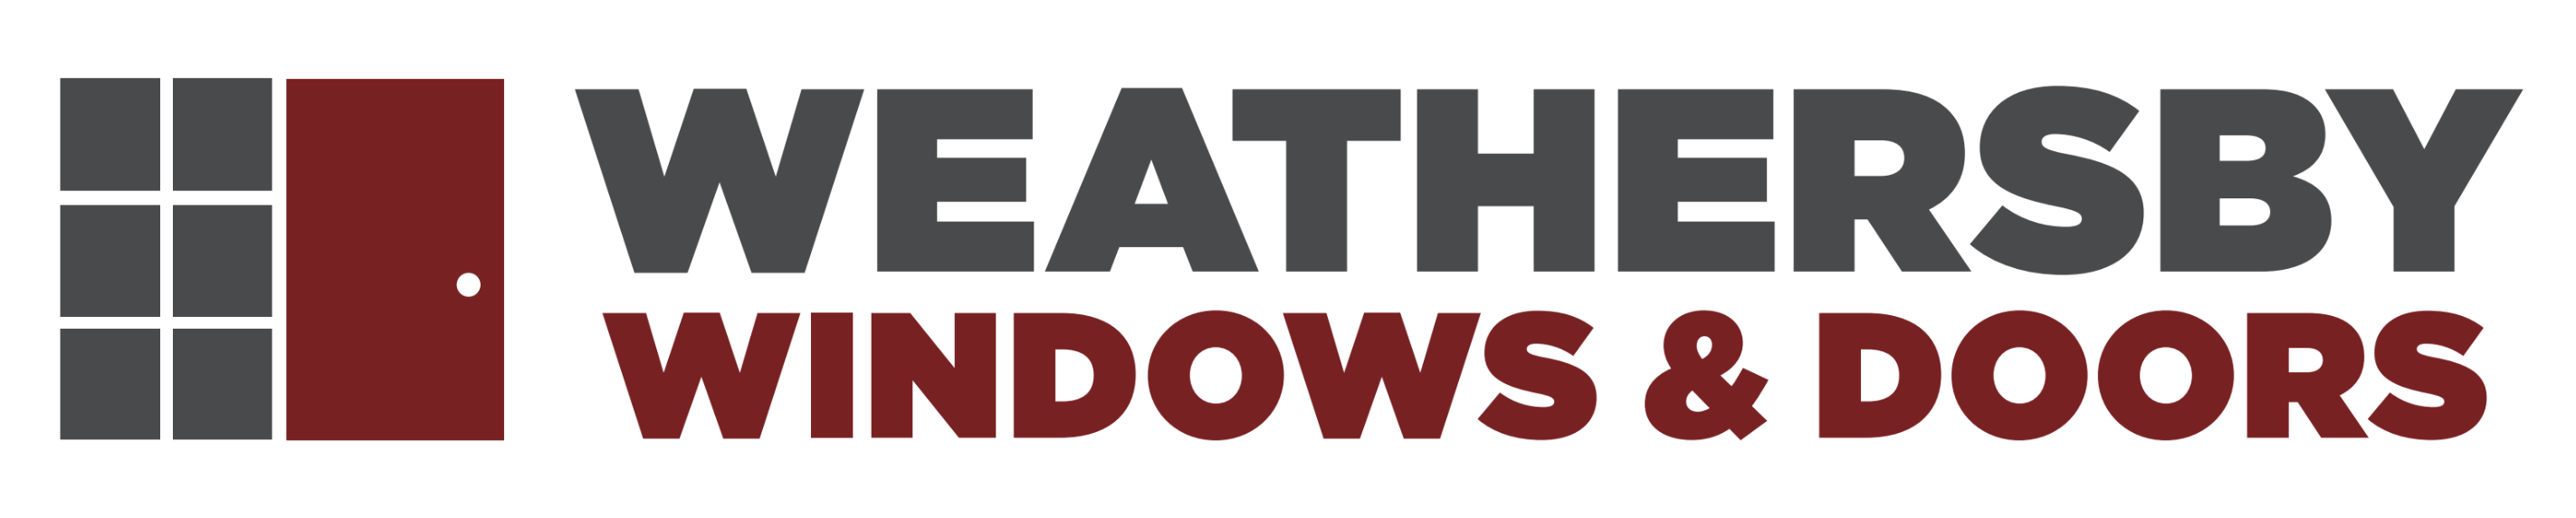 Weathersby Windows & Doors, LLC Logo